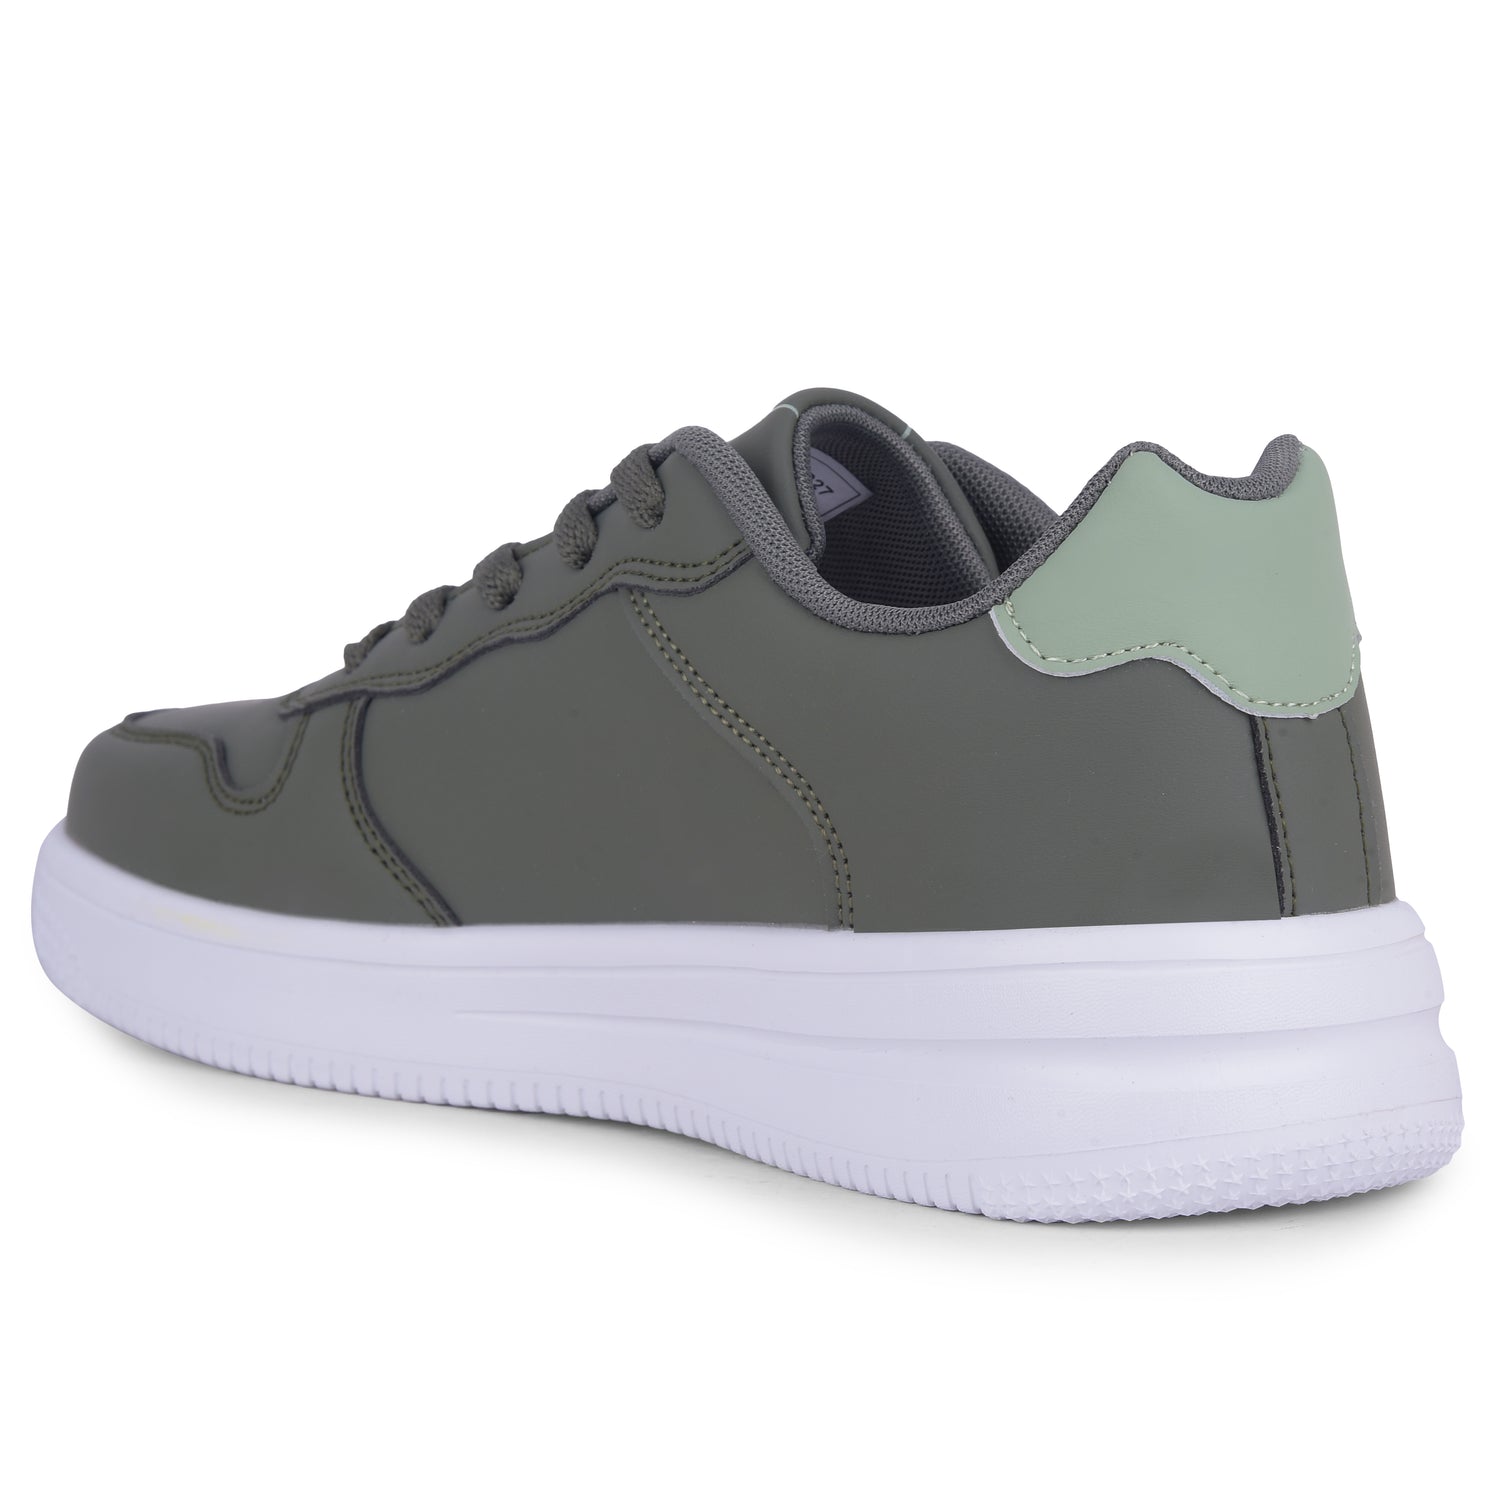 Calcetto CLT-2027 Army Green Sneaker For Men